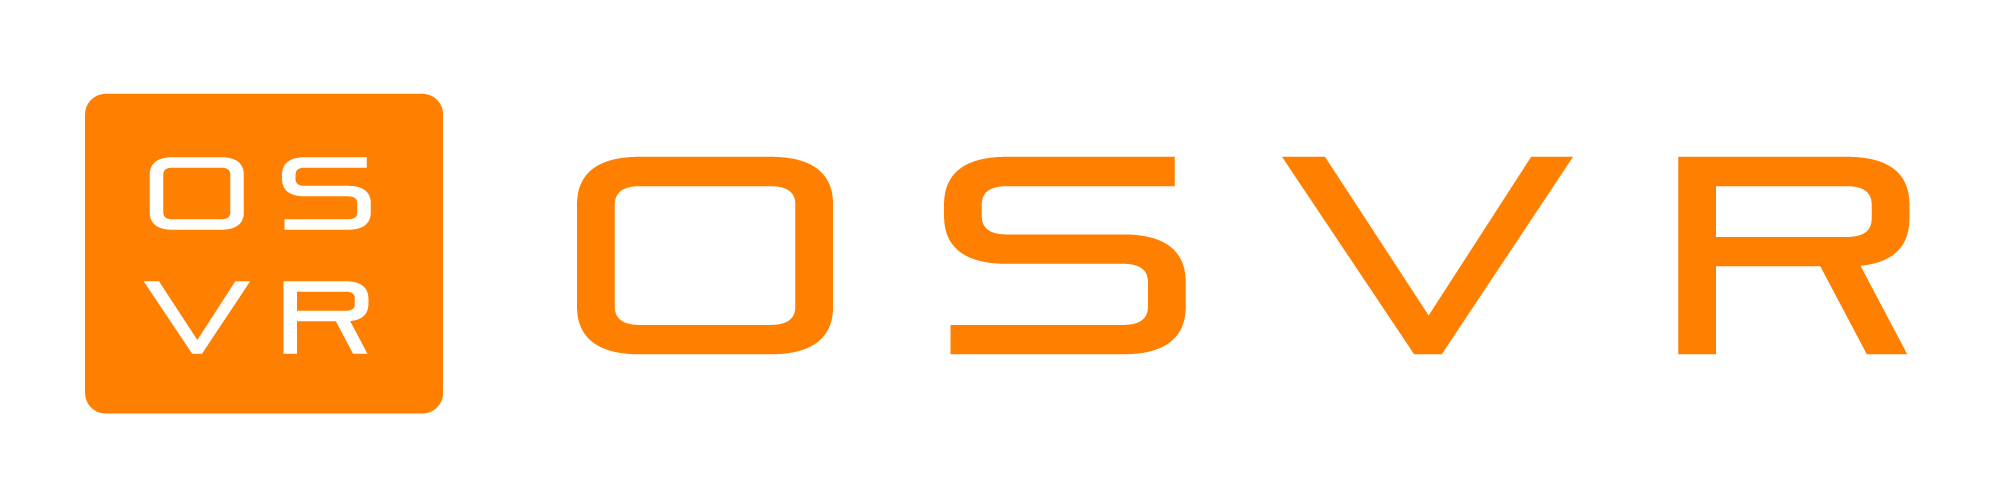 OSVR Logo.png